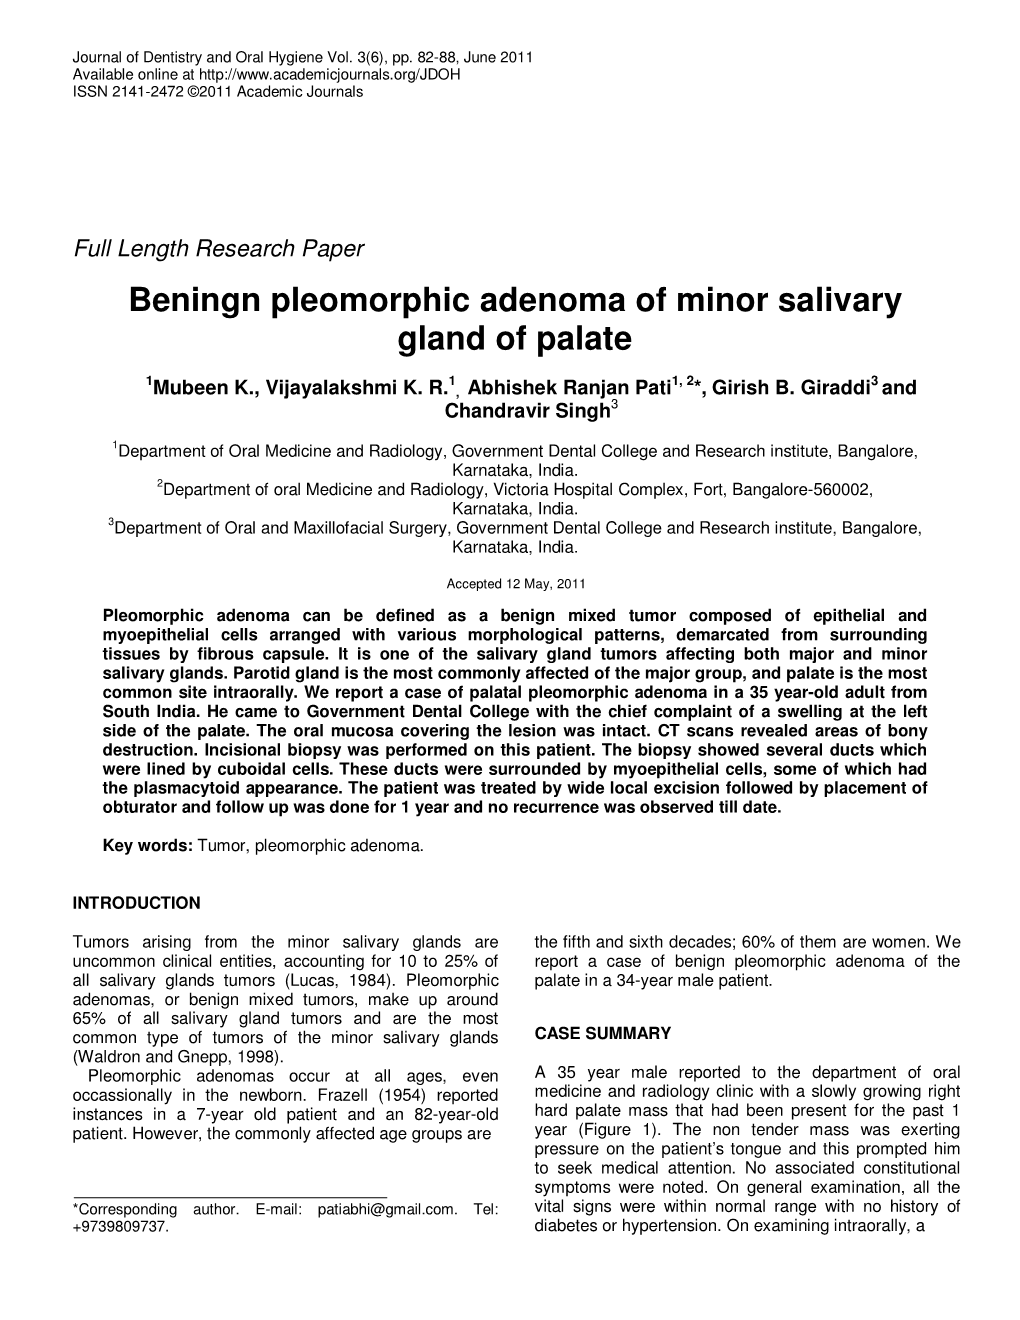 Beningn Pleomorphic Adenoma of Minor Salivary Gland of Palate